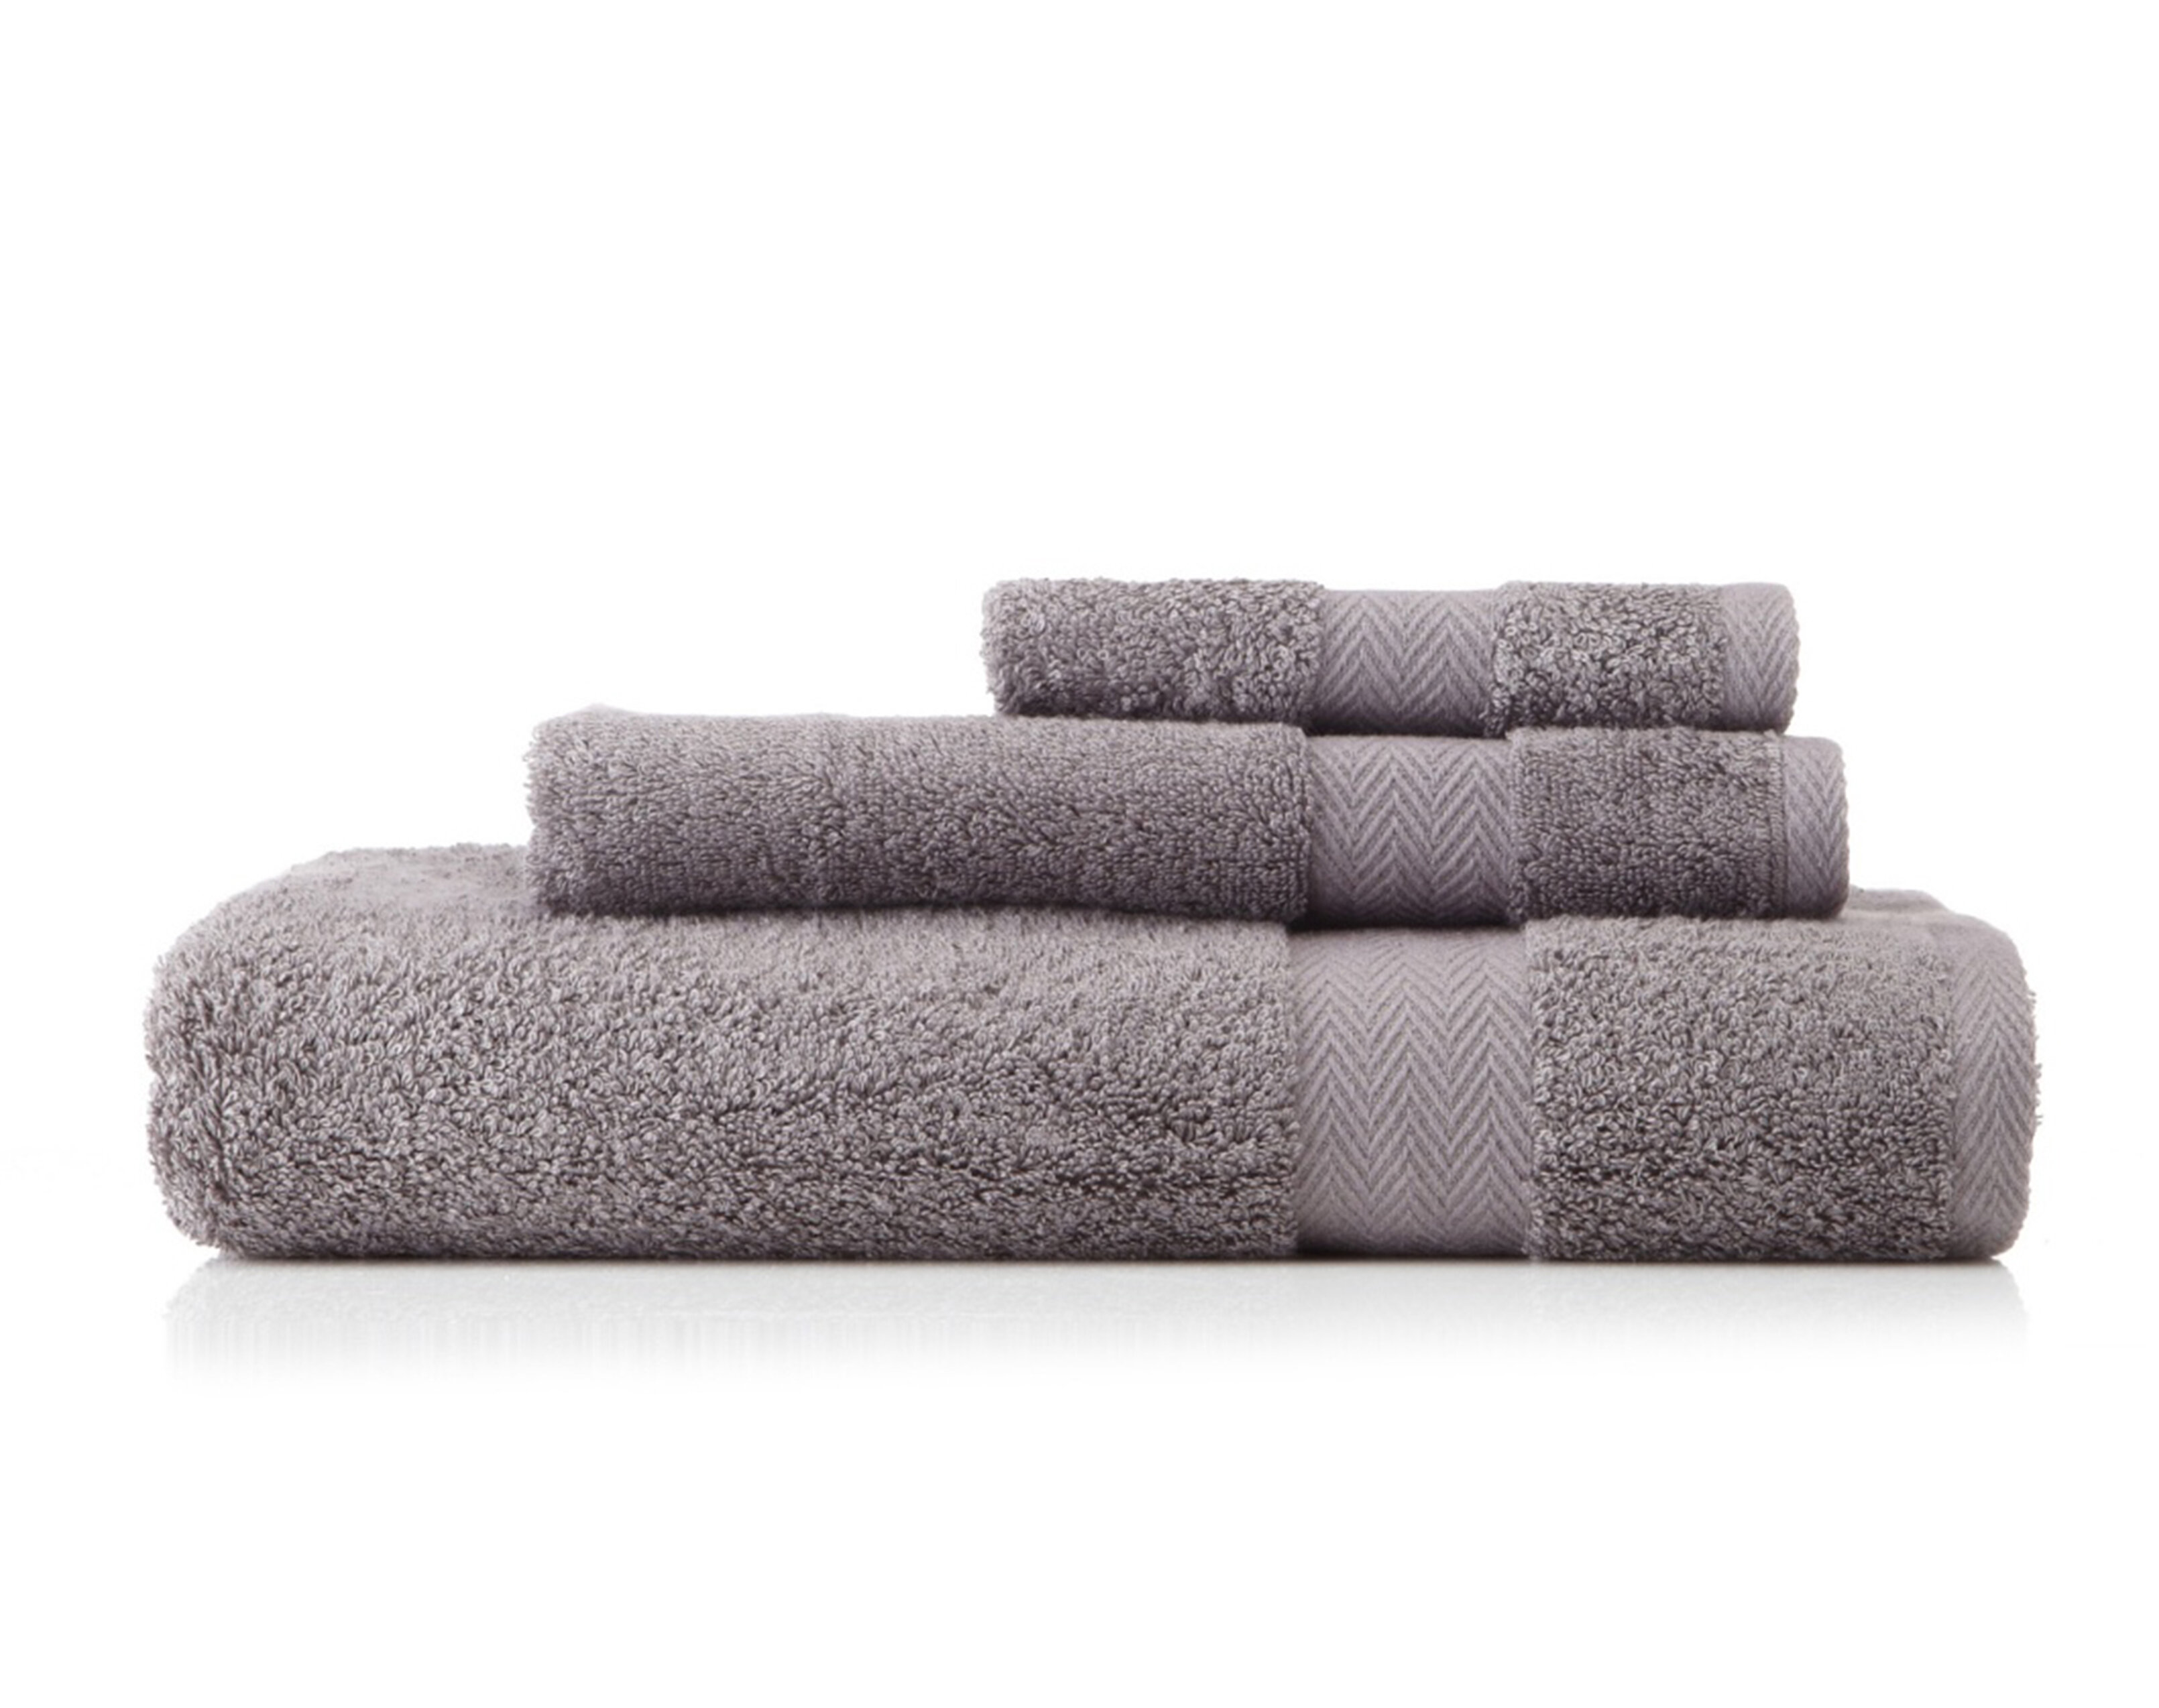 gray bath towel set